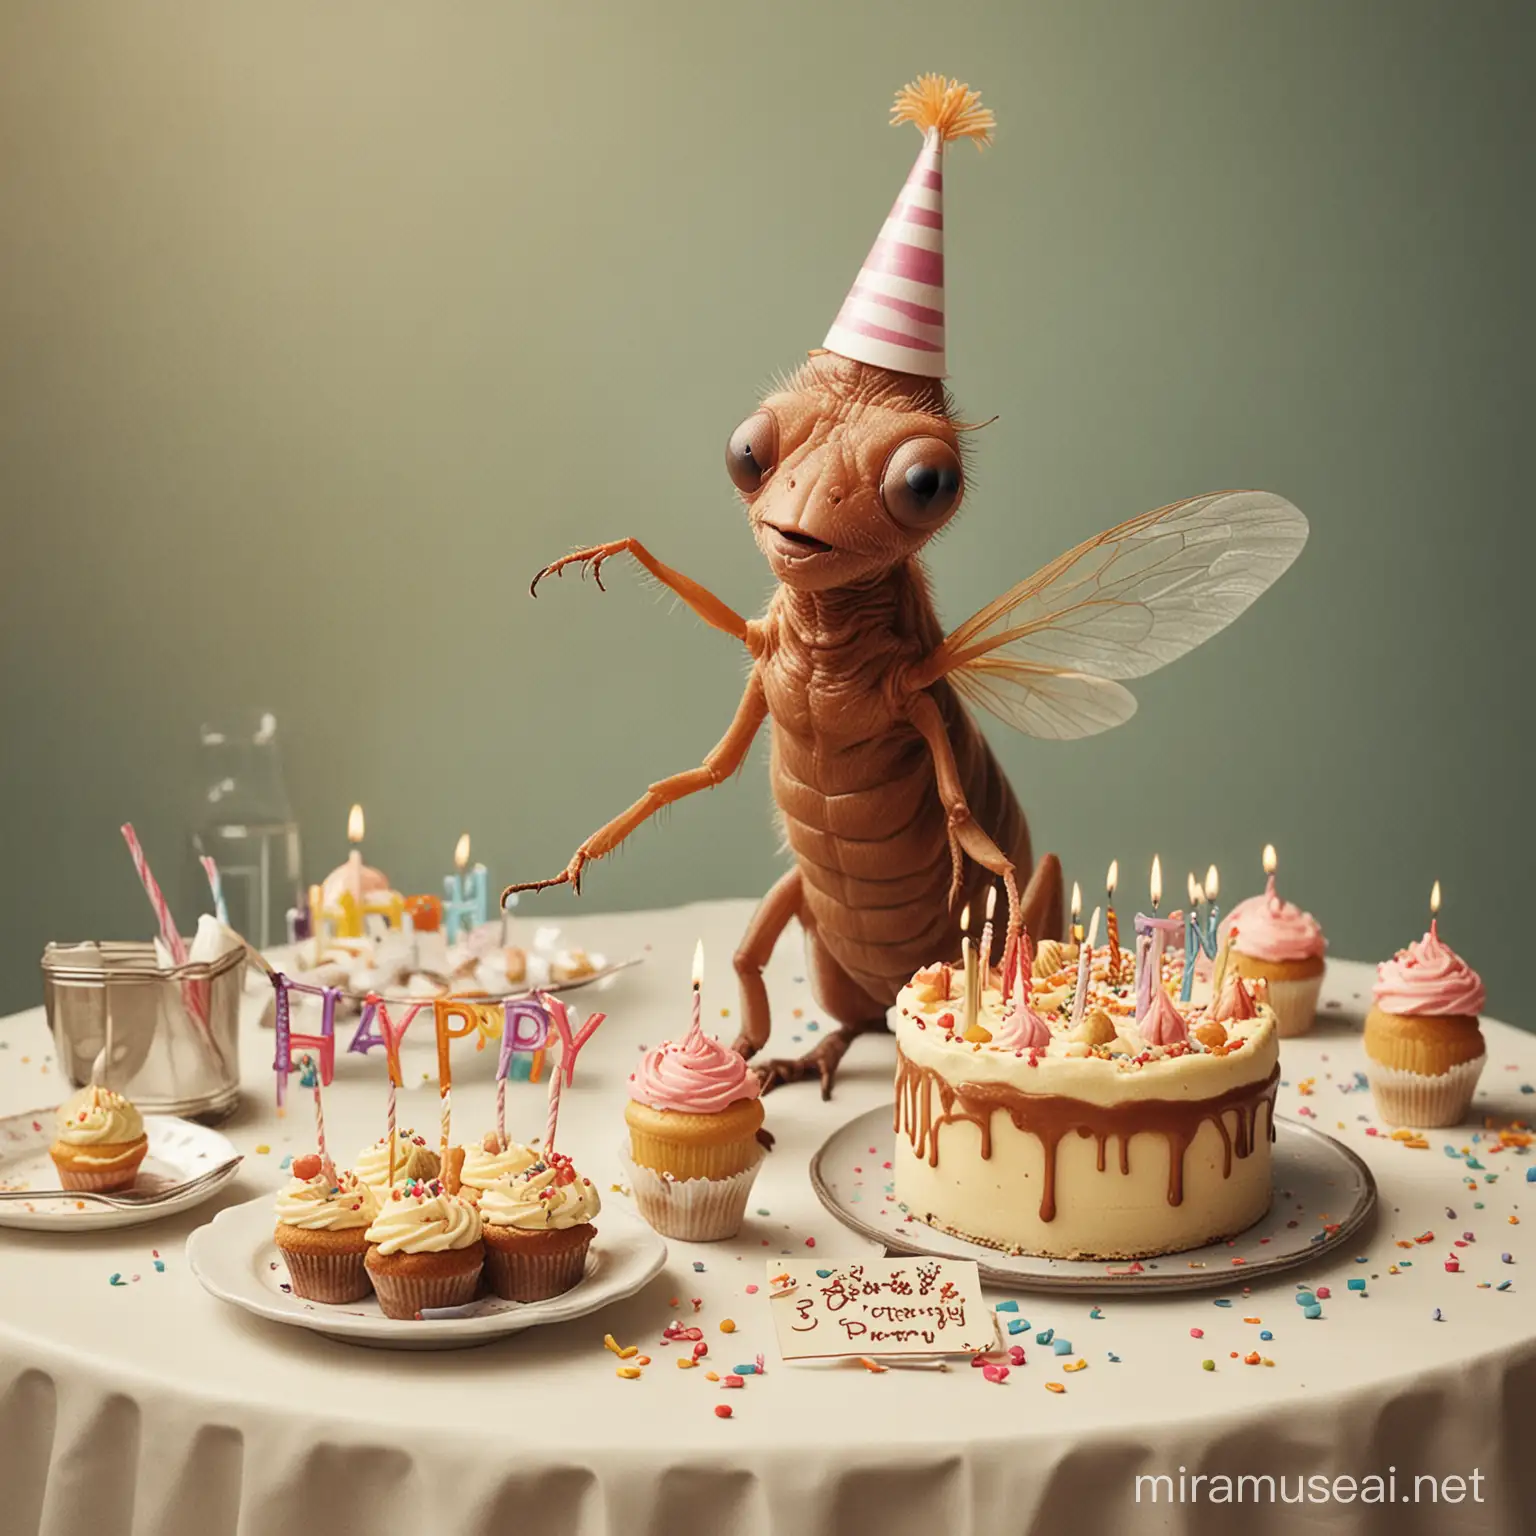 a flea having a birthday party